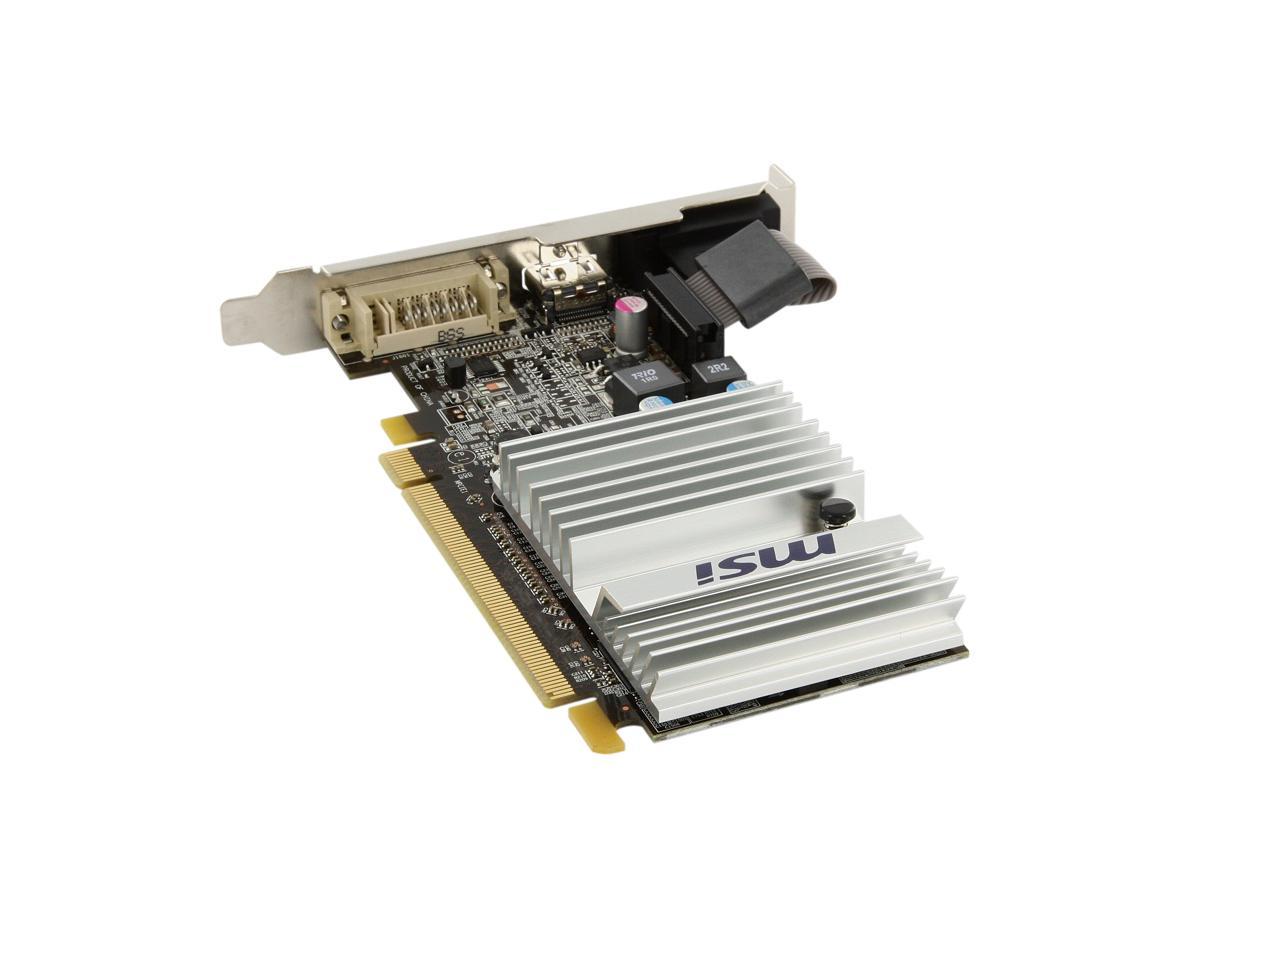 MSI Radeon HD 5450 Video Card R5450-MD1GD3H/LP - Newegg.com